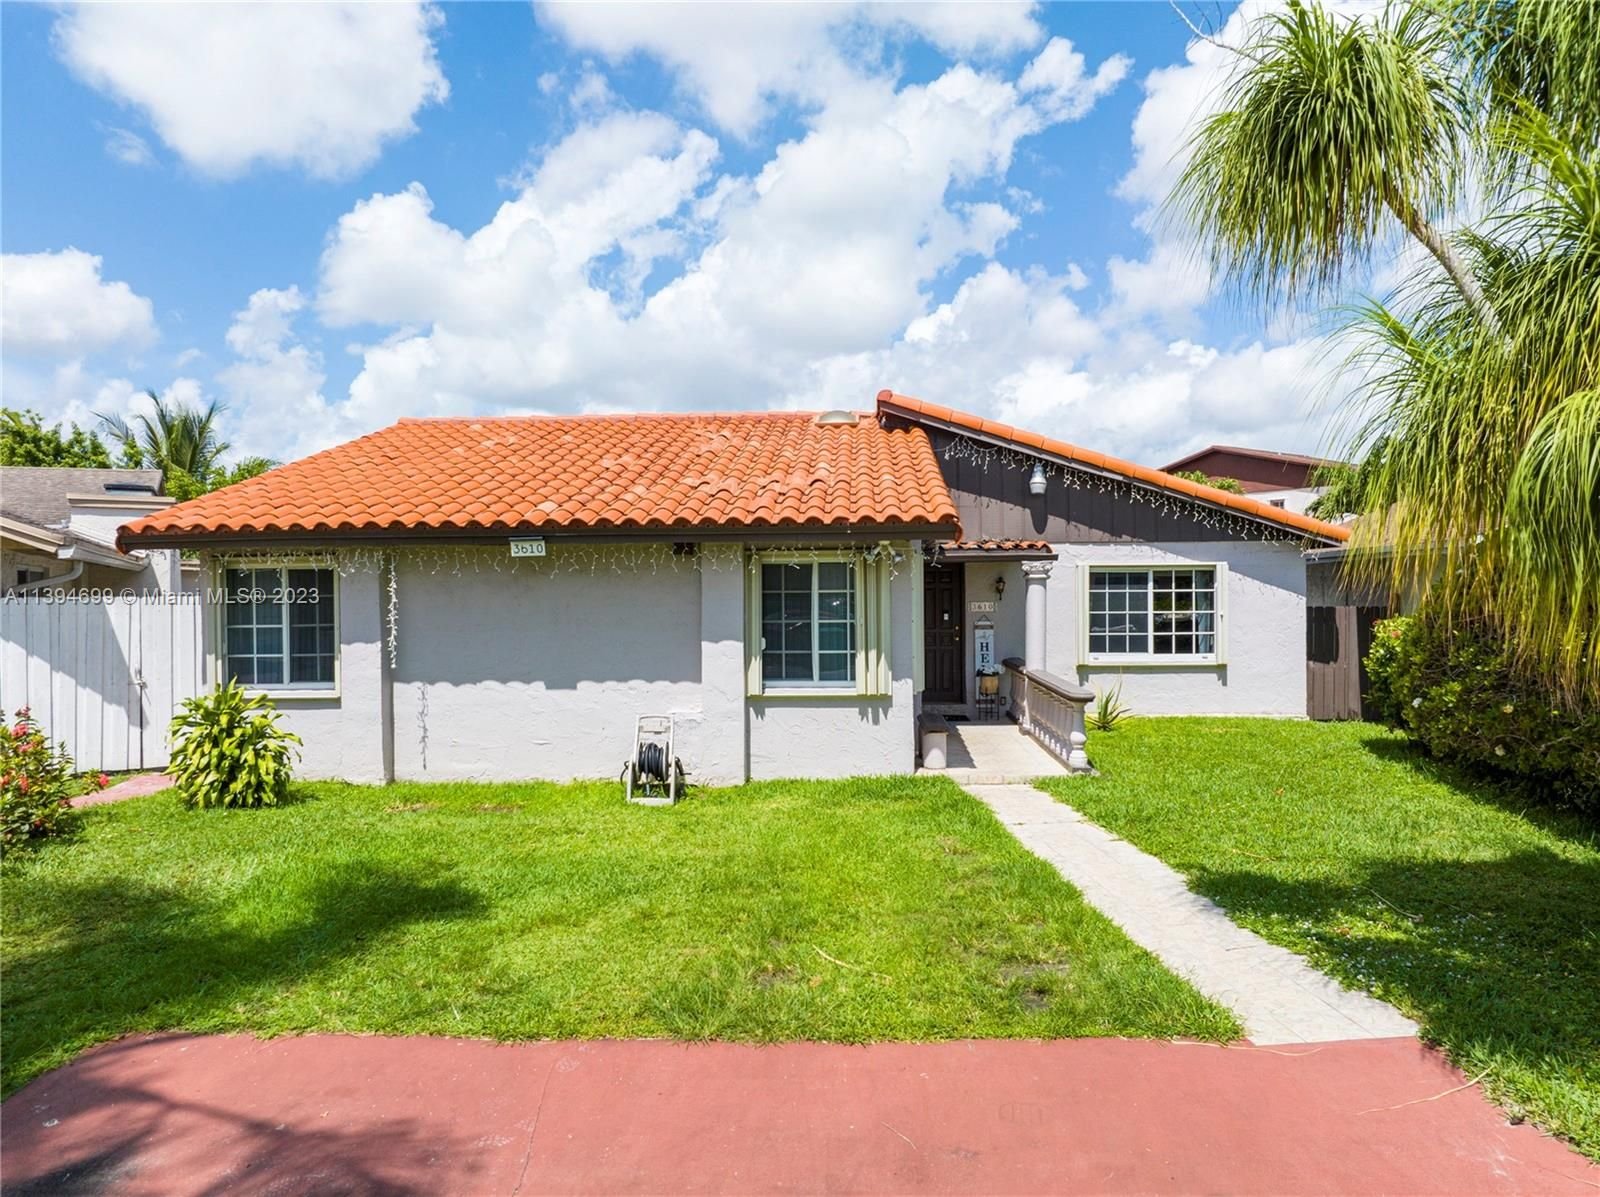 Real estate property located at 3610 112th Pl, Miami-Dade County, Miami, FL